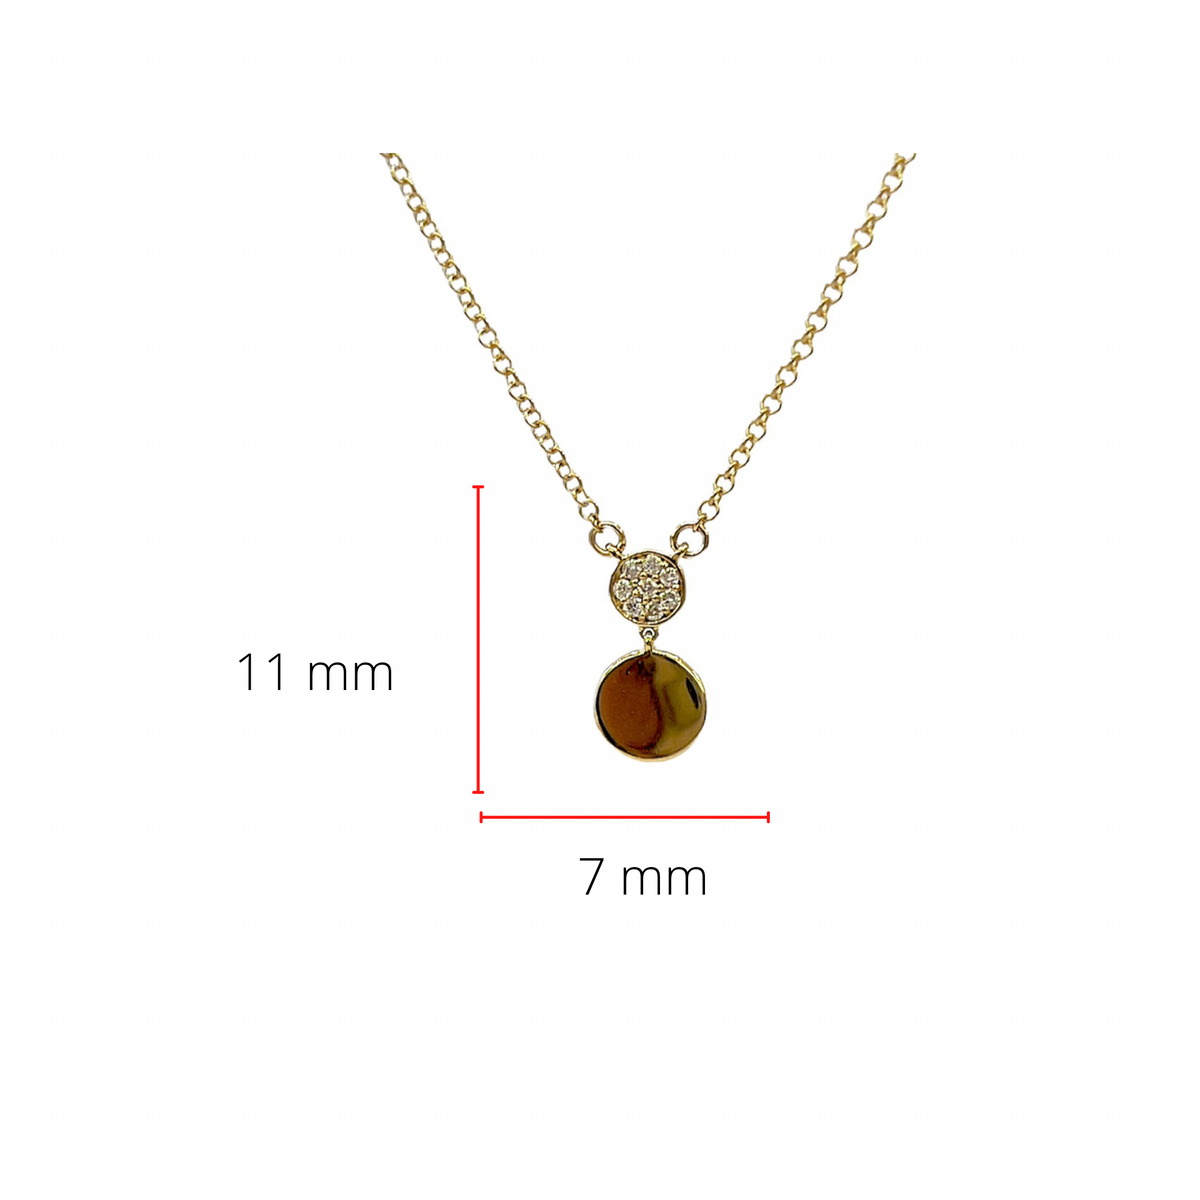 10K Yellow Gold 0.04cttw Diamond Necklace - 18&quot;